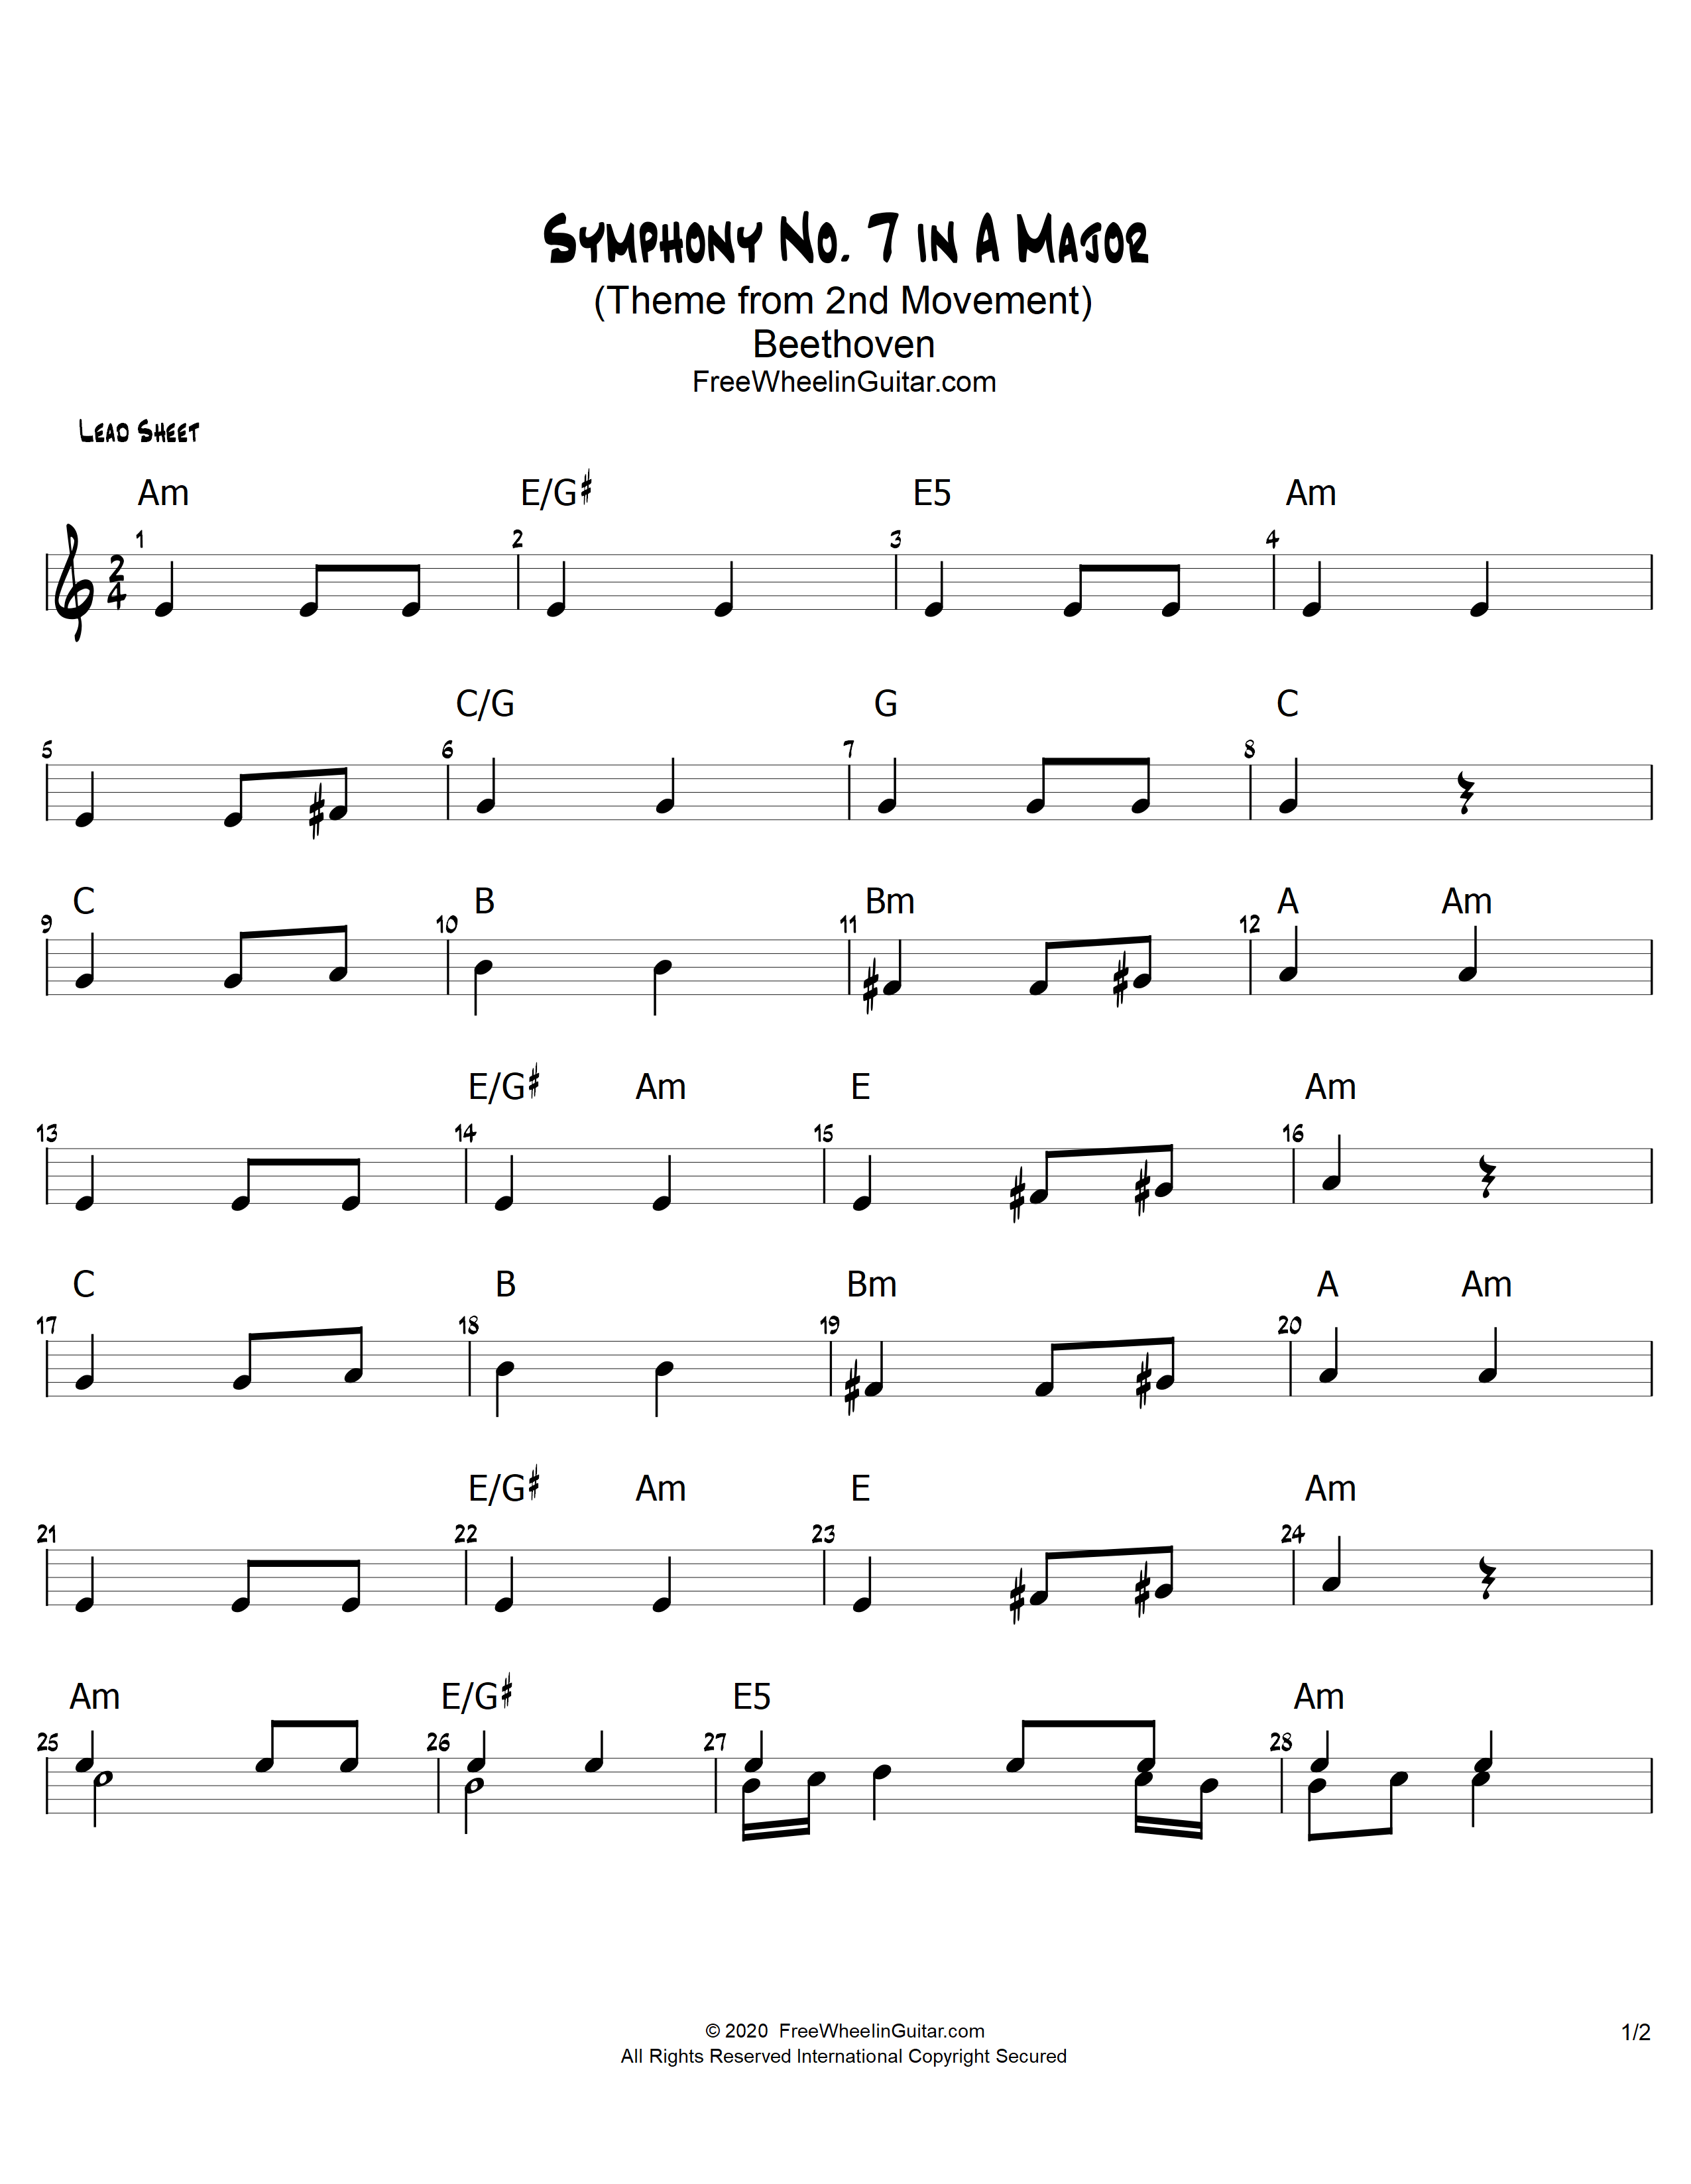 beethoven 7th symphony movement 2 sheet music